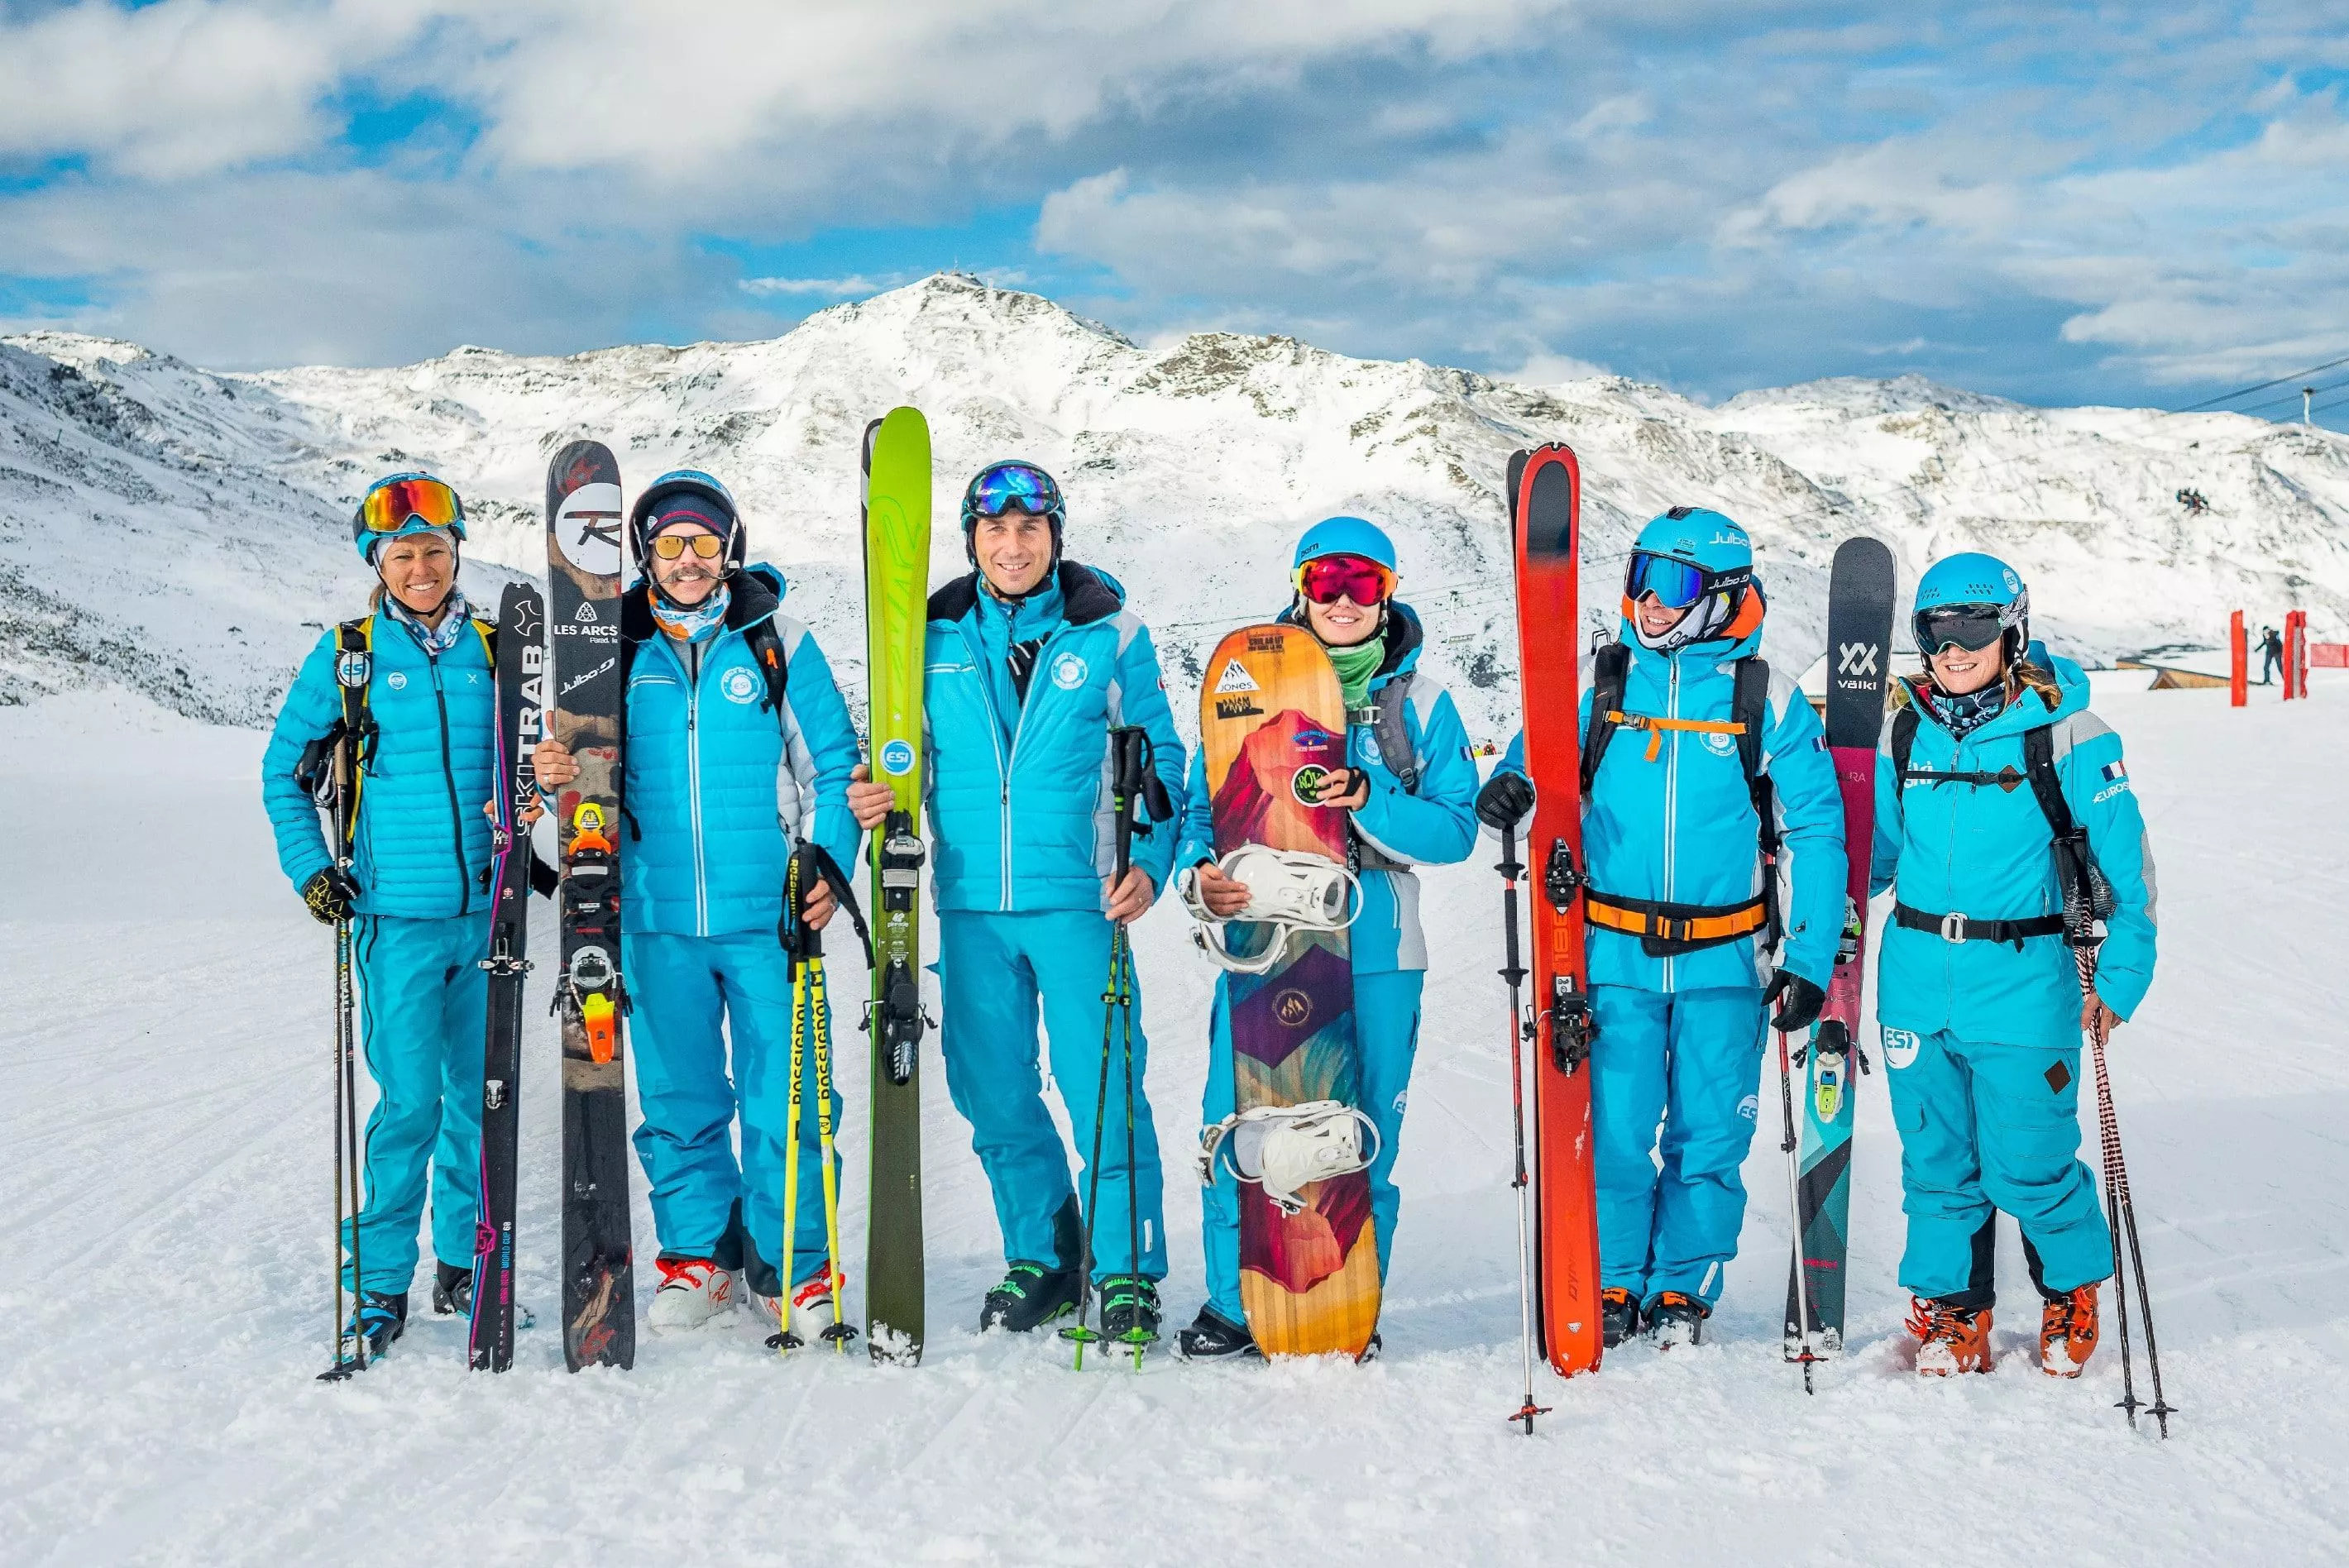 International Ski School Alpe D'huez in France, Europe | Snowboarding,Skiing - Rated 0.8